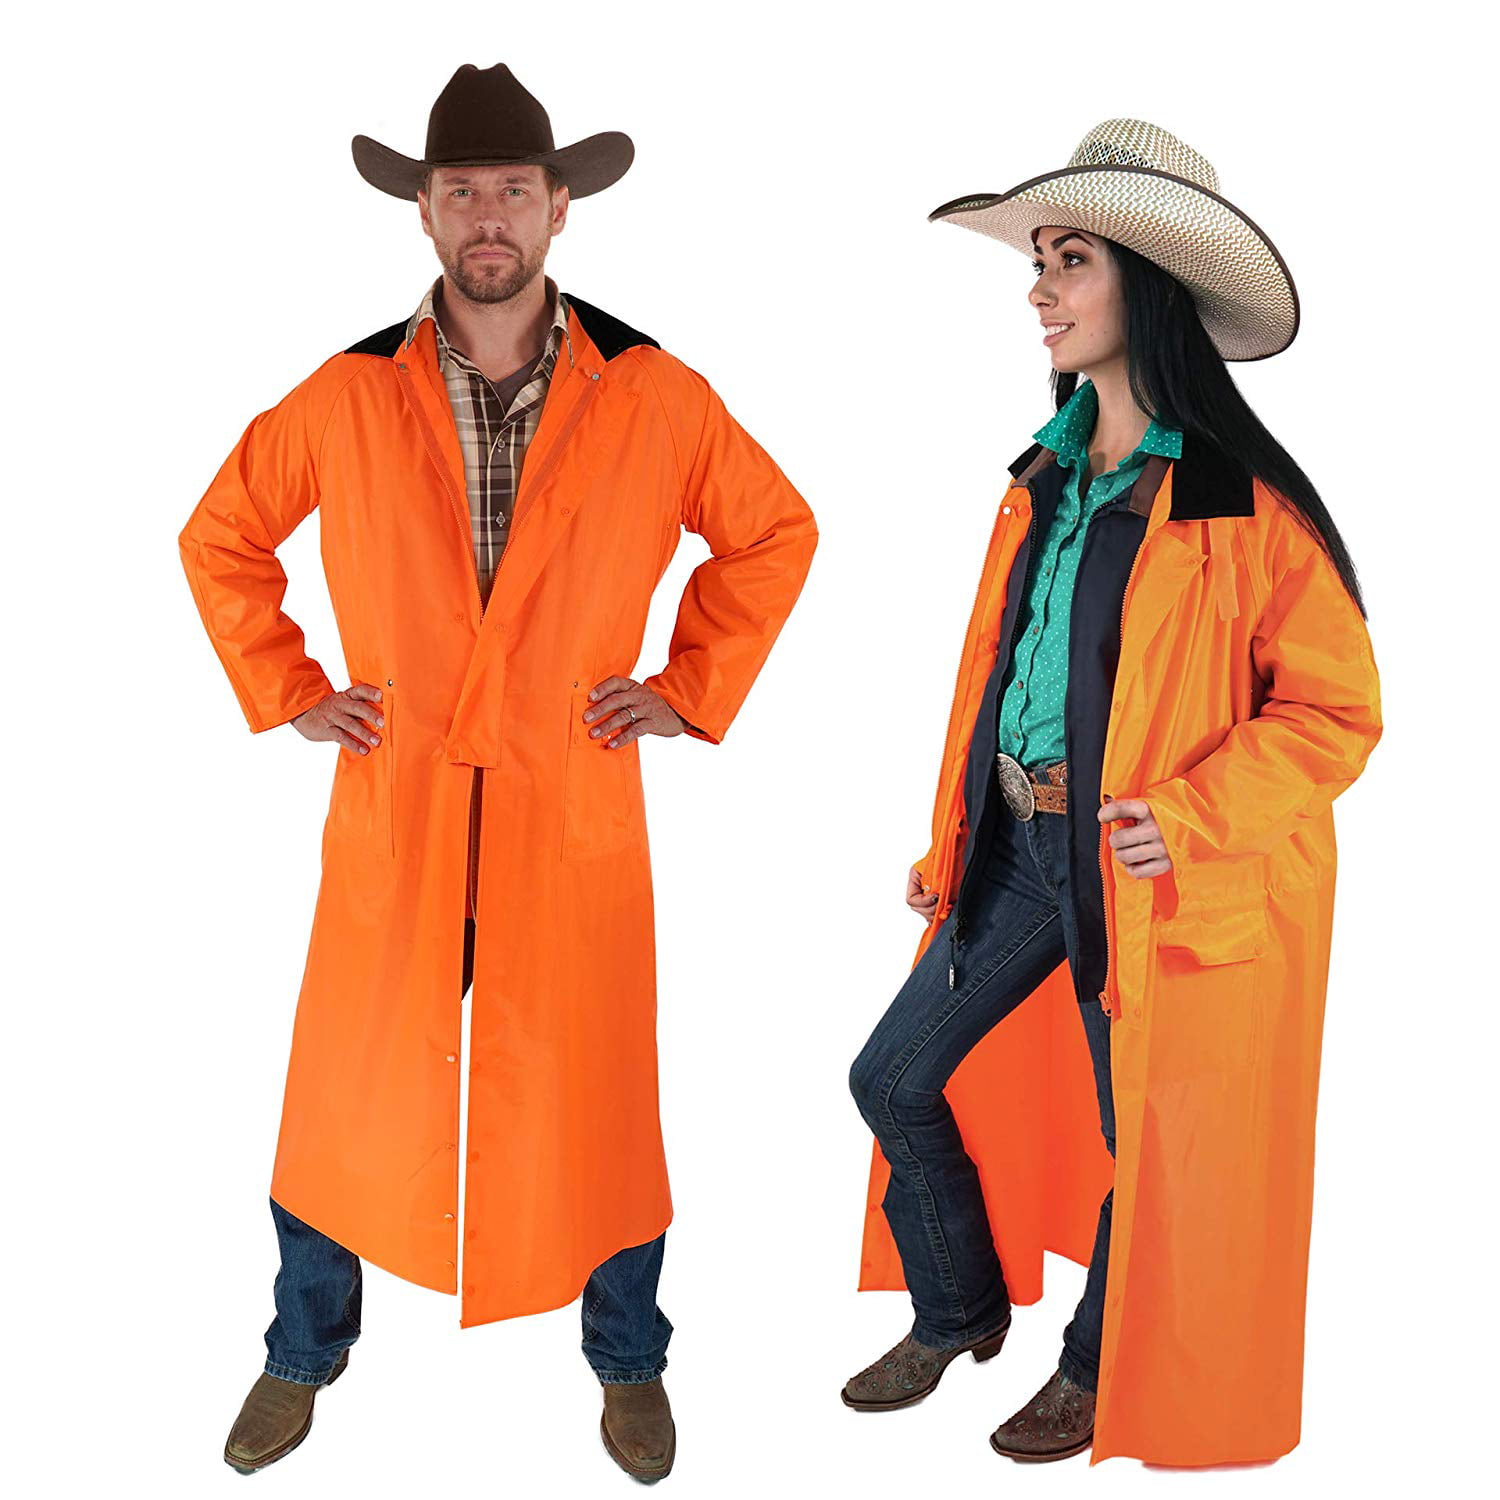 American Cowboy Saddle Slicker Rain Coat Duster 100% Waterproof Full Length Unisex